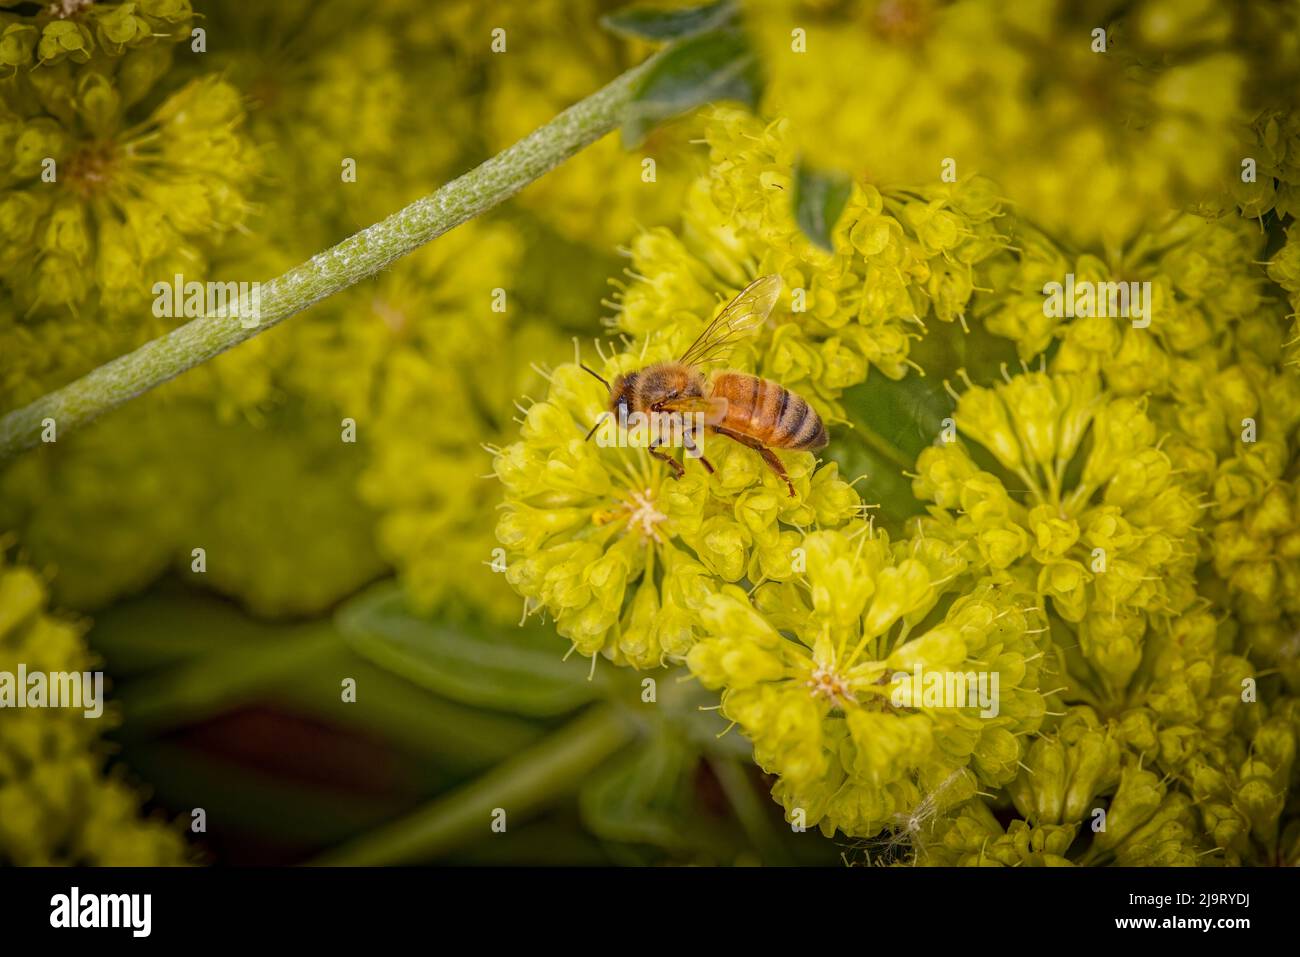 USA, Colorado, Fort Collins. Honey bee on yellow allium flowers. Stock Photo